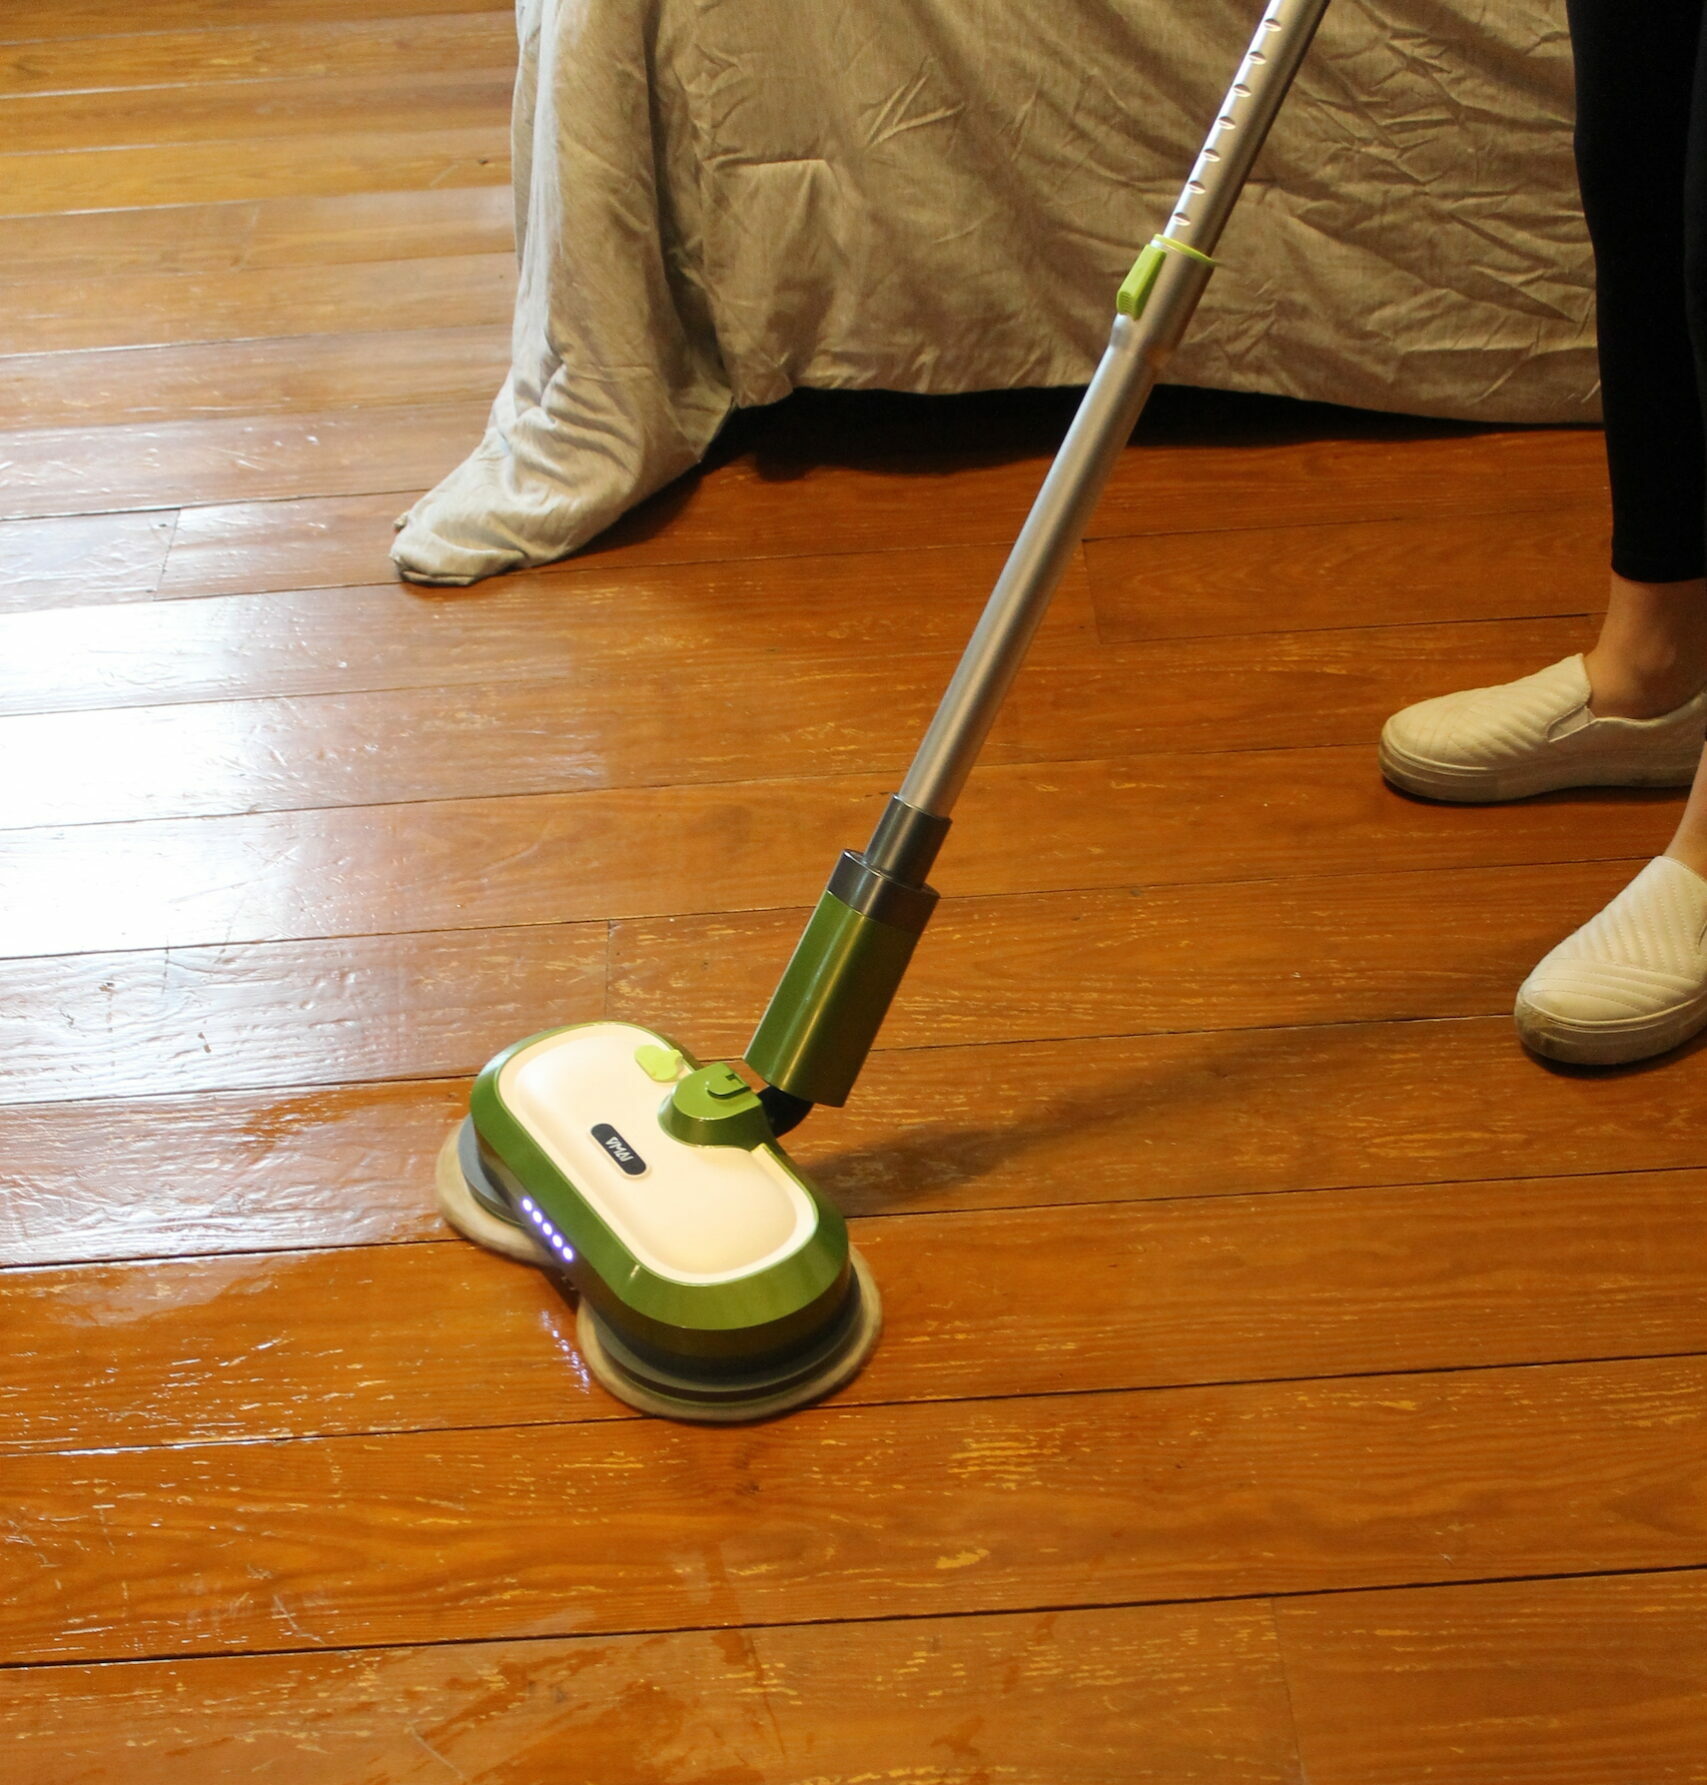 Tester using an electric mop on hardwood floors